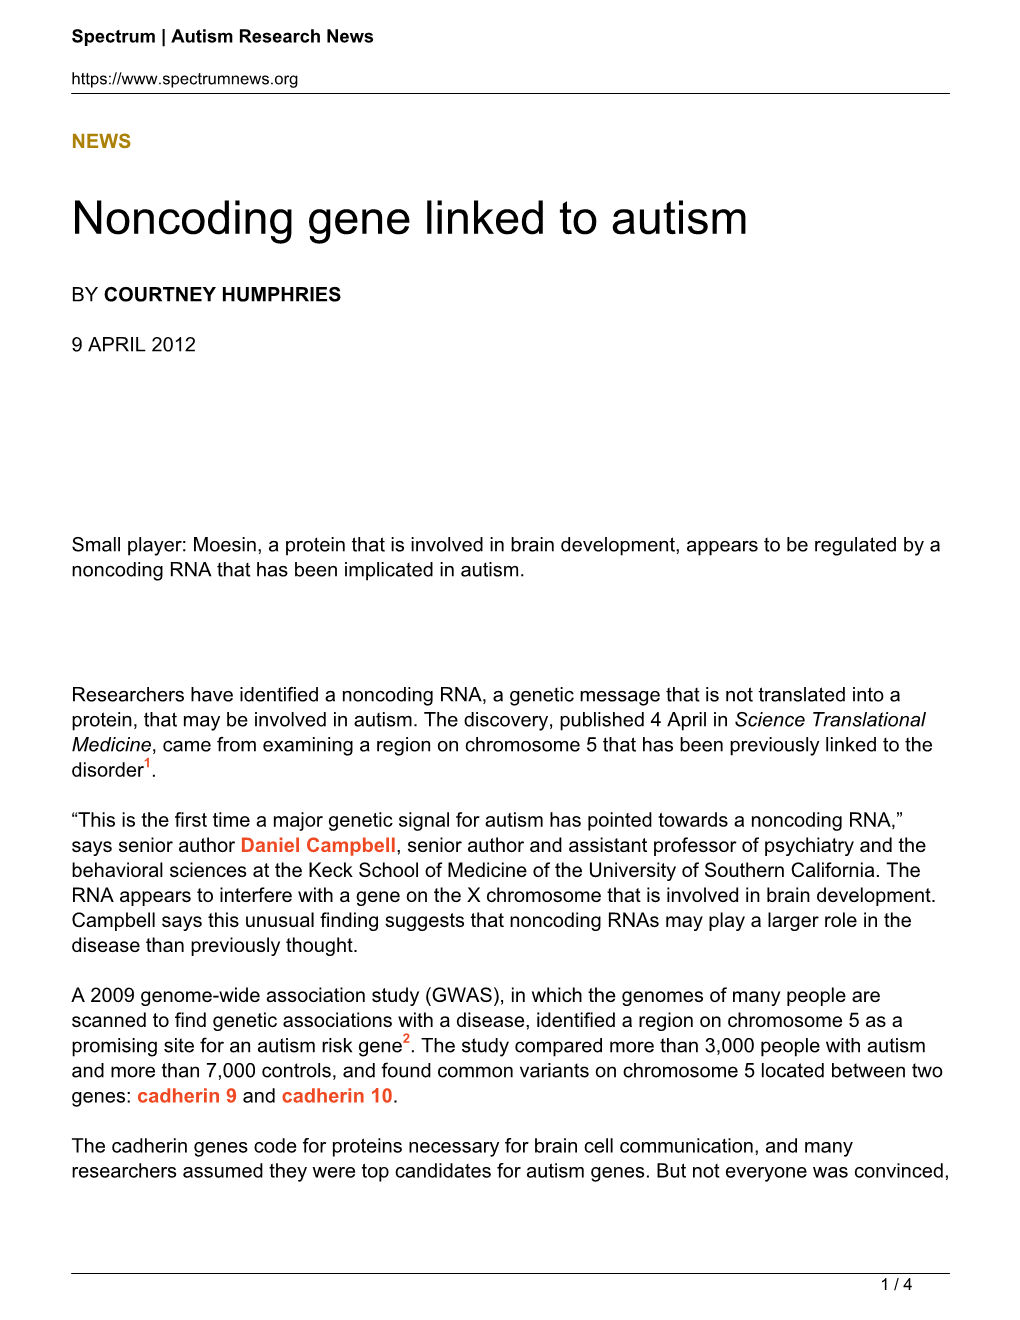 Noncoding Gene Linked to Autism